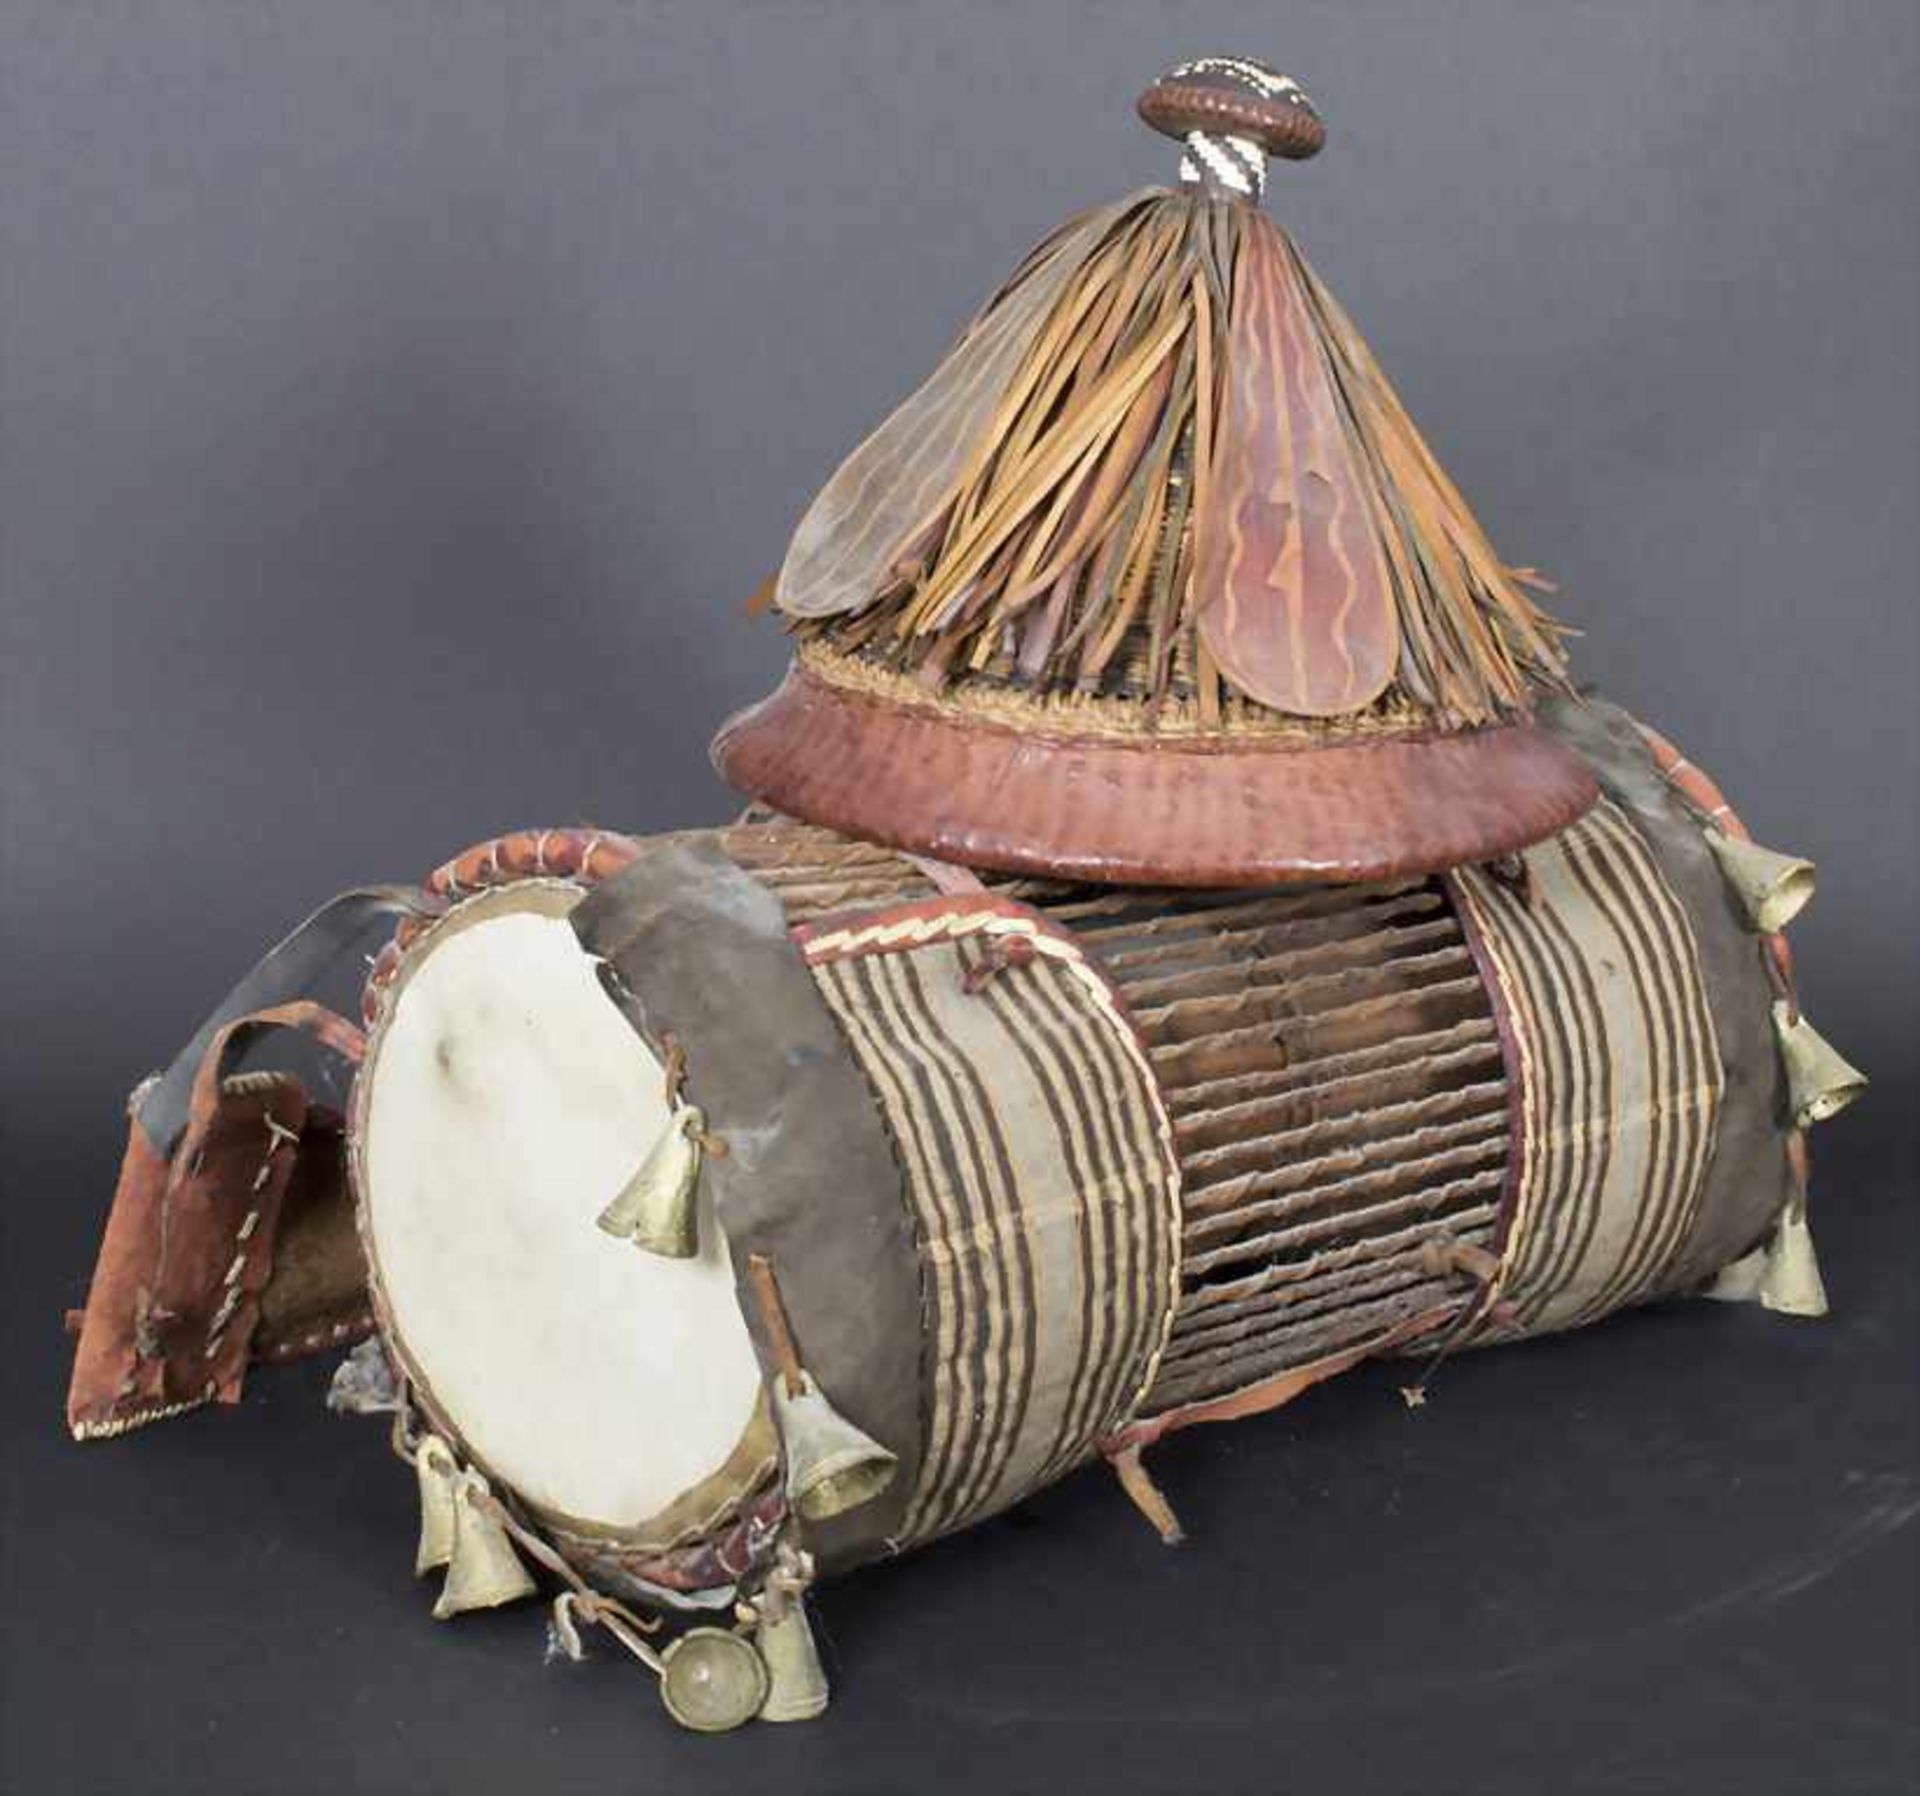 Trommel und Hut, WestafrikaMaterial: Leder, Planzenfaser, Stoff, Holz, Messing-Glocken,Maße: Trommel